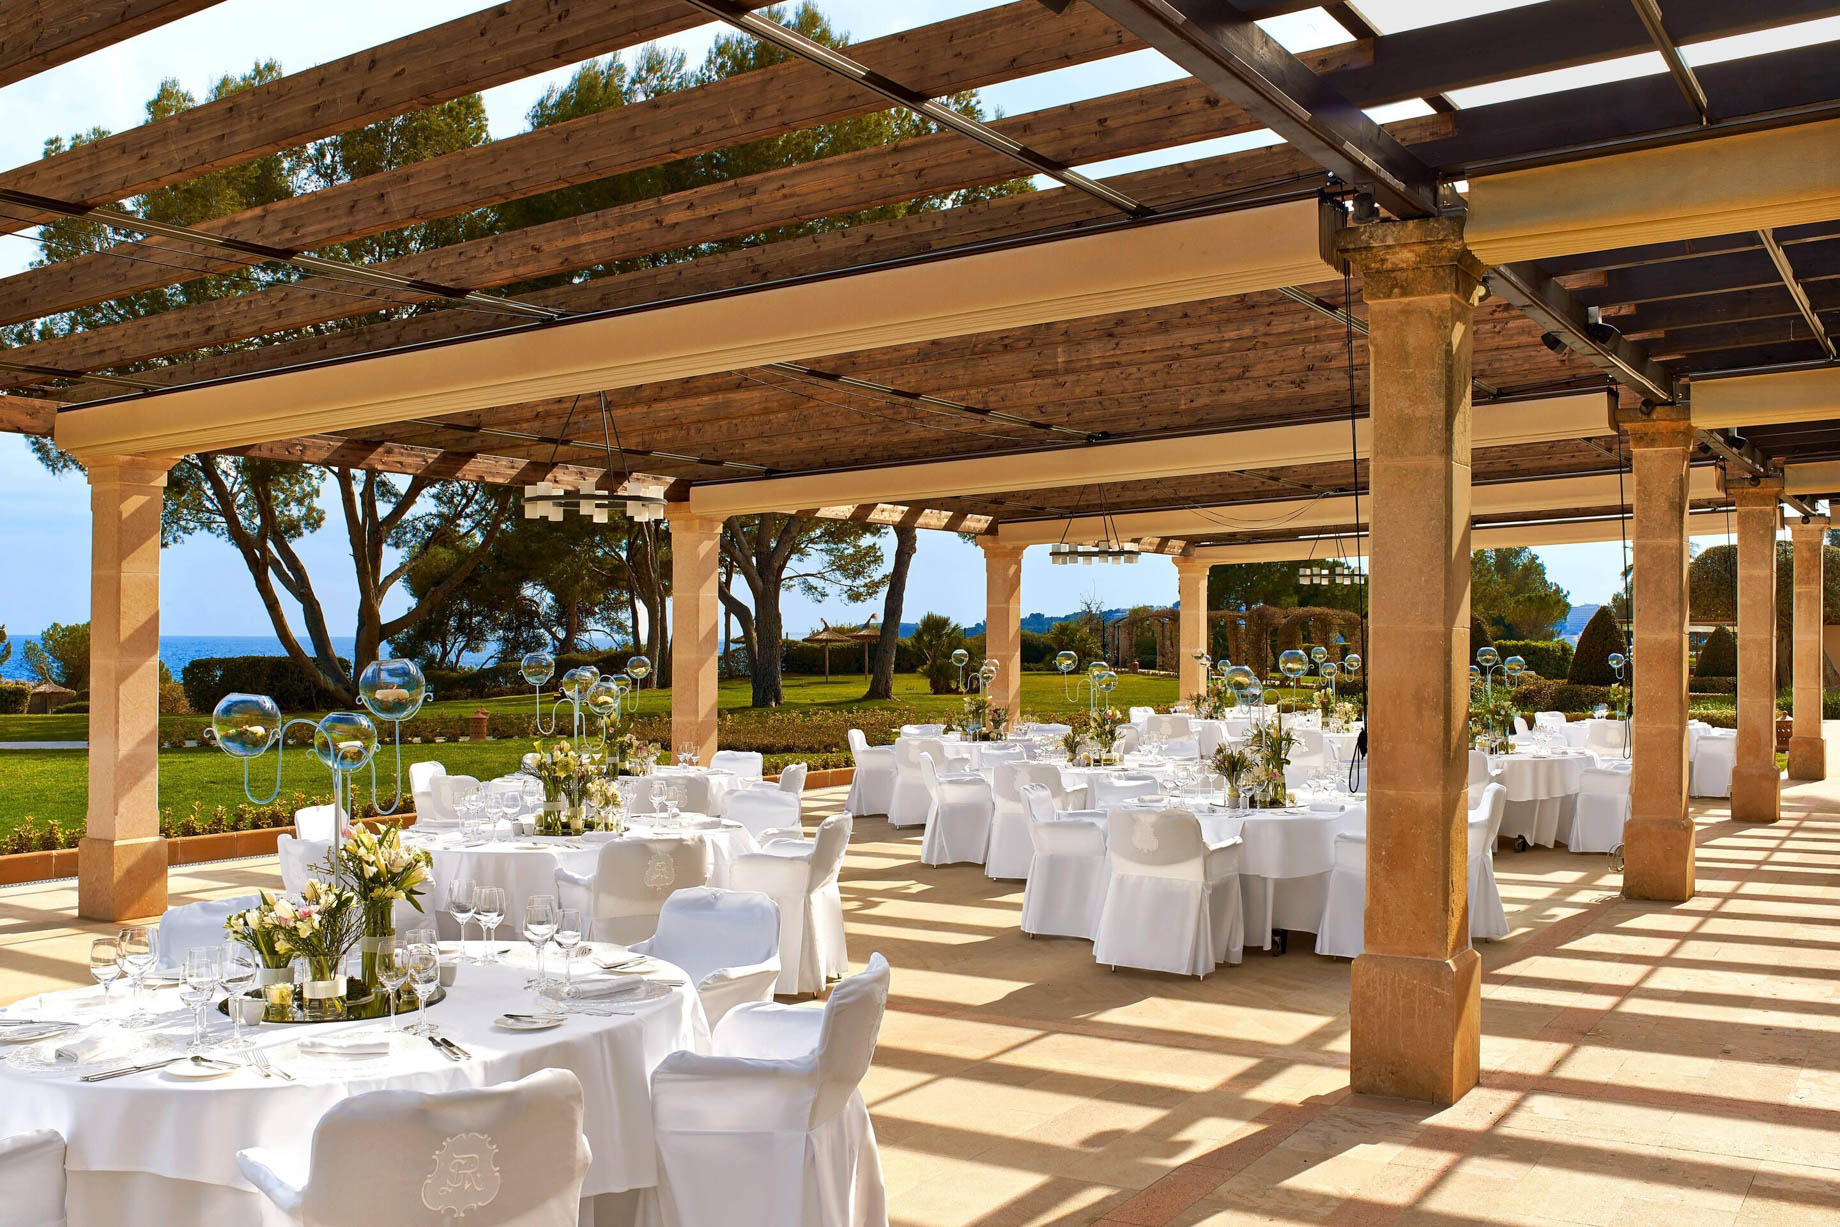 The St. Regis Mardavall Mallorca Resort - Palma de Mallorca, Spain - Ponent Terrace